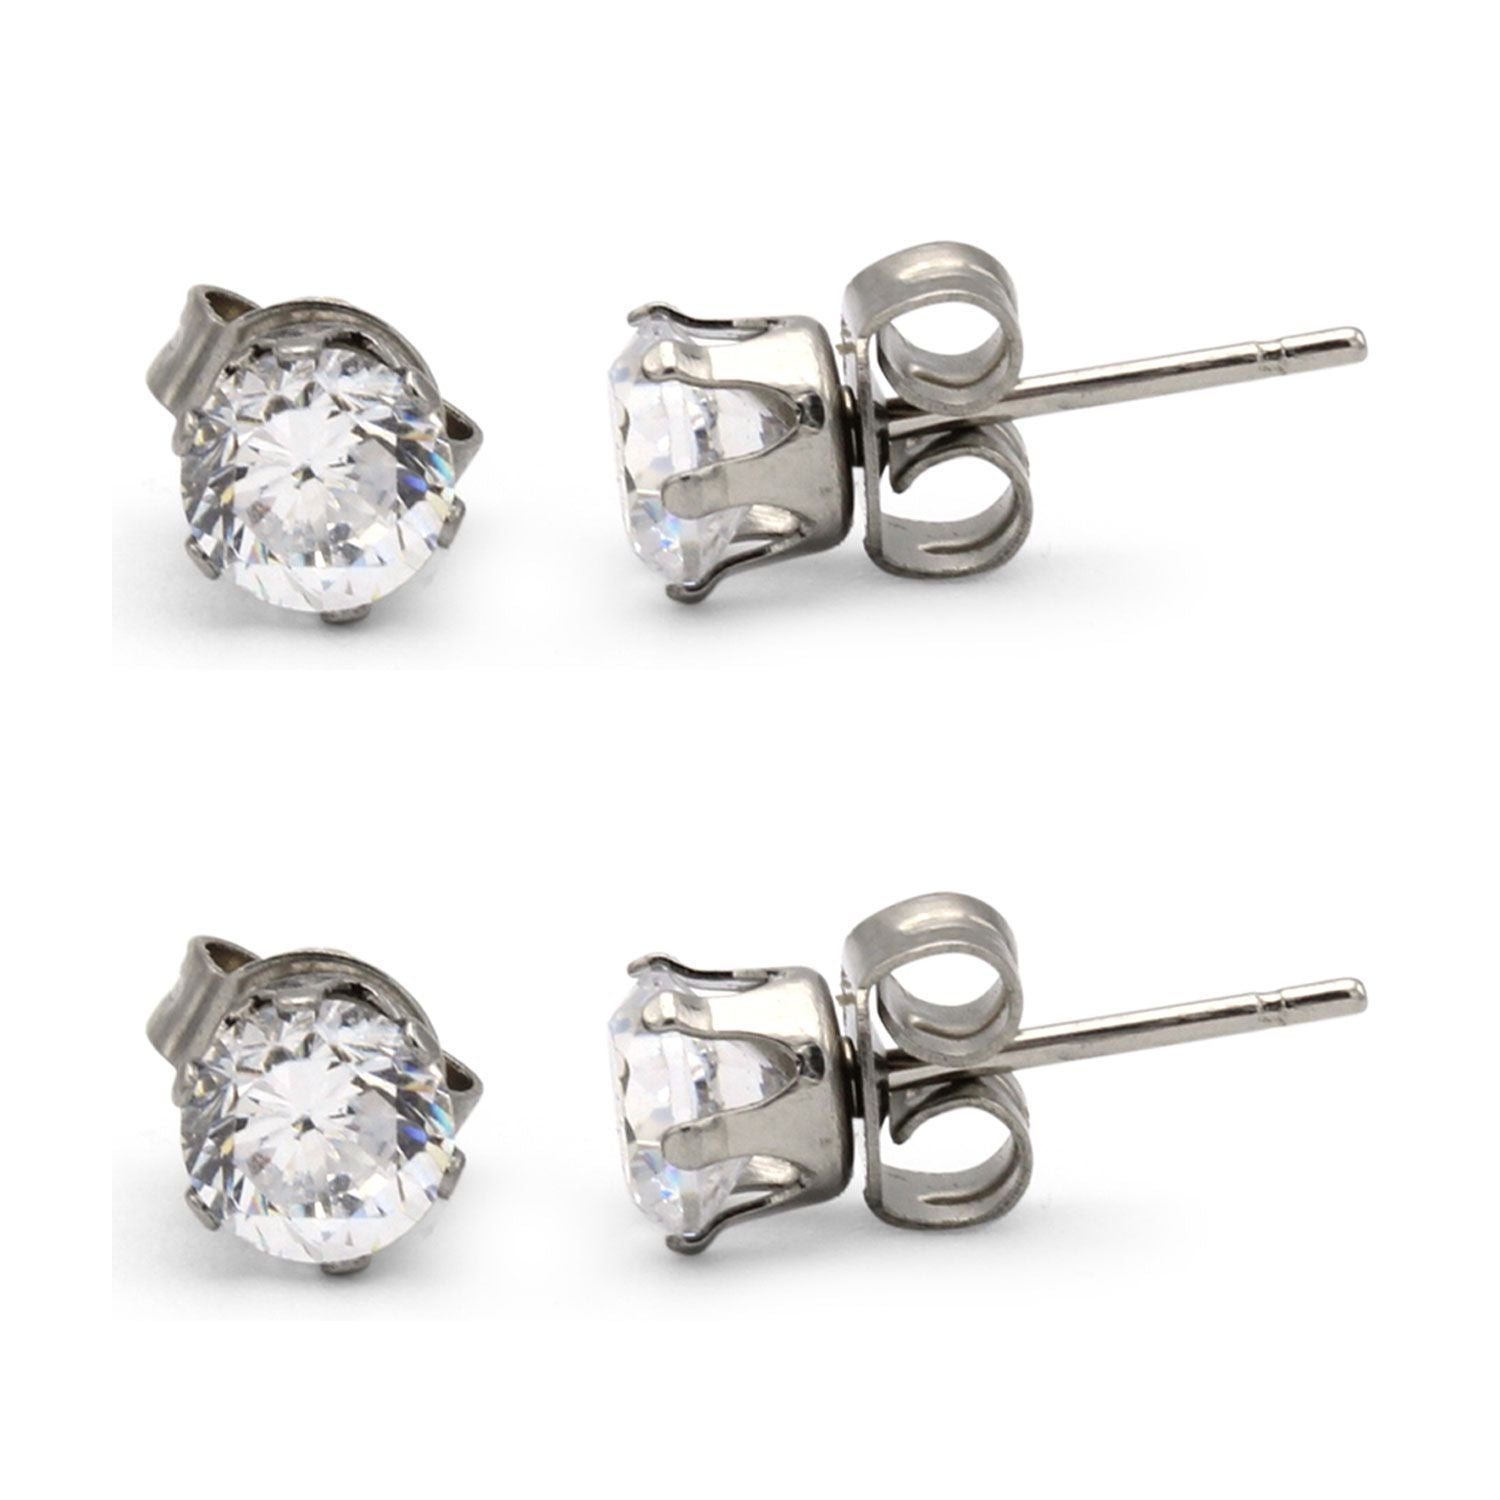 Cubic Zirconia Round Silver Stud Earrings Set Of 2 Stainless Steel Jewelry Men Women